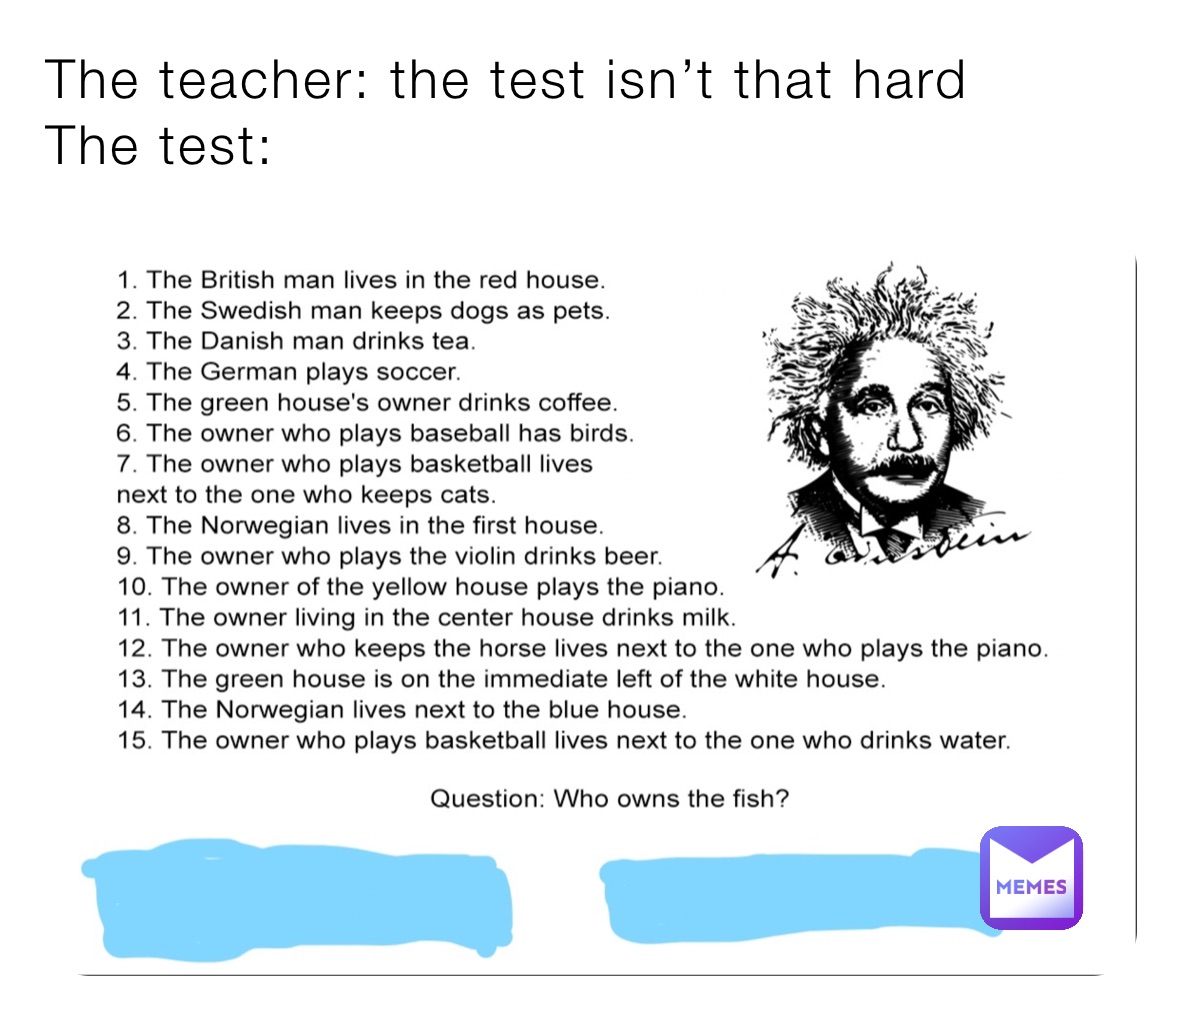 The teacher: the test isn’t that hard
The test: